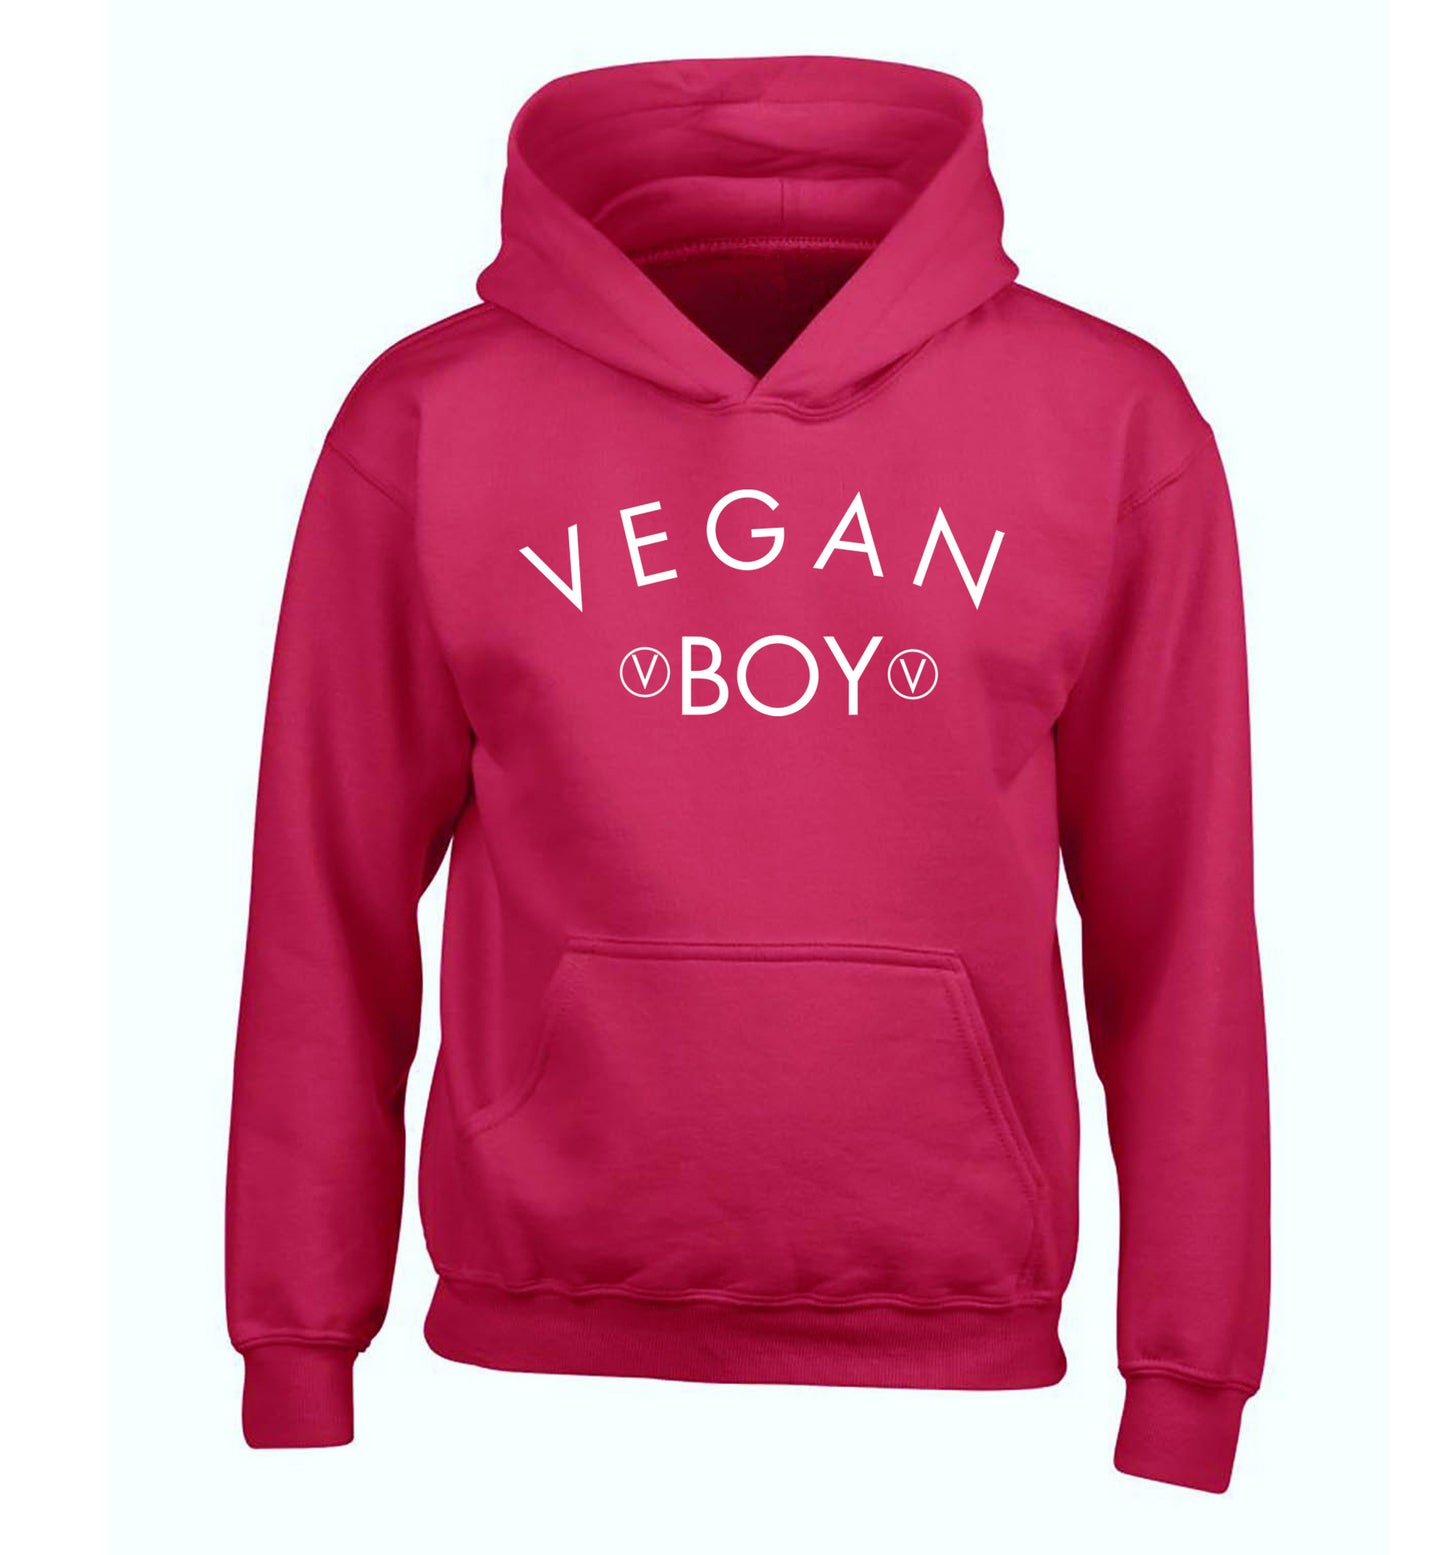 Vegan boy children's pink hoodie 12-14 Years